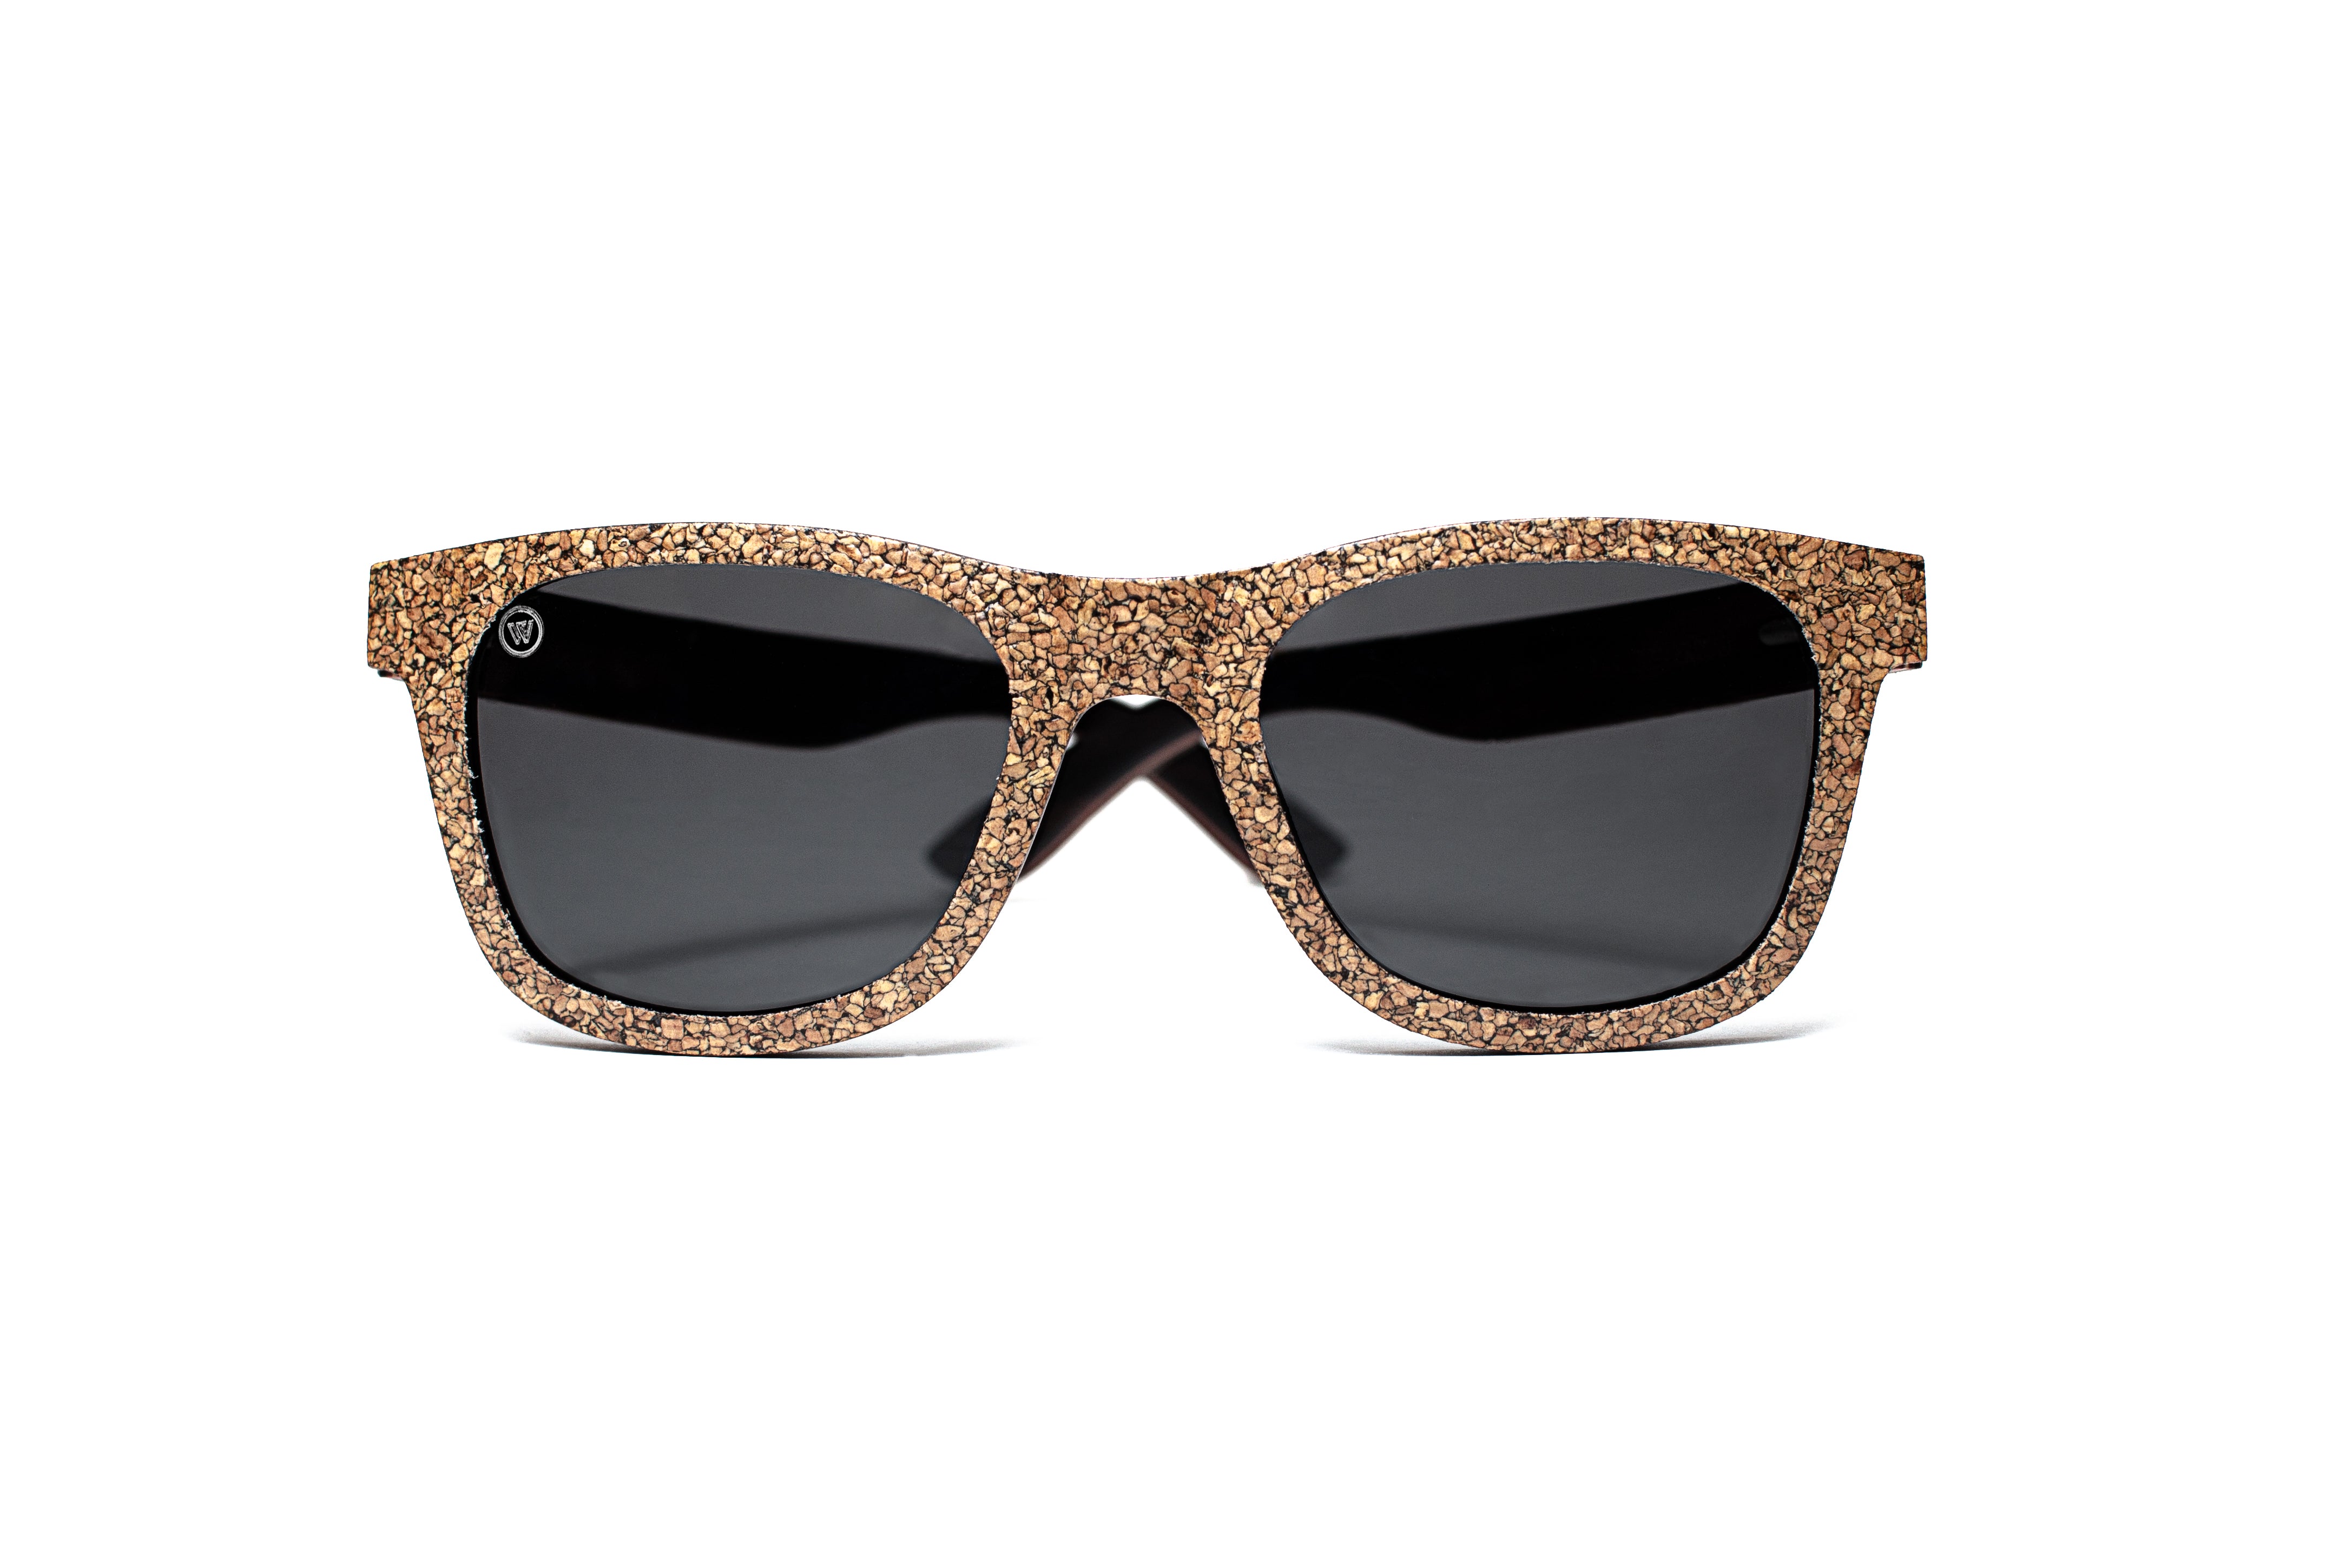 Sughero wooden sunglasses woodhoy